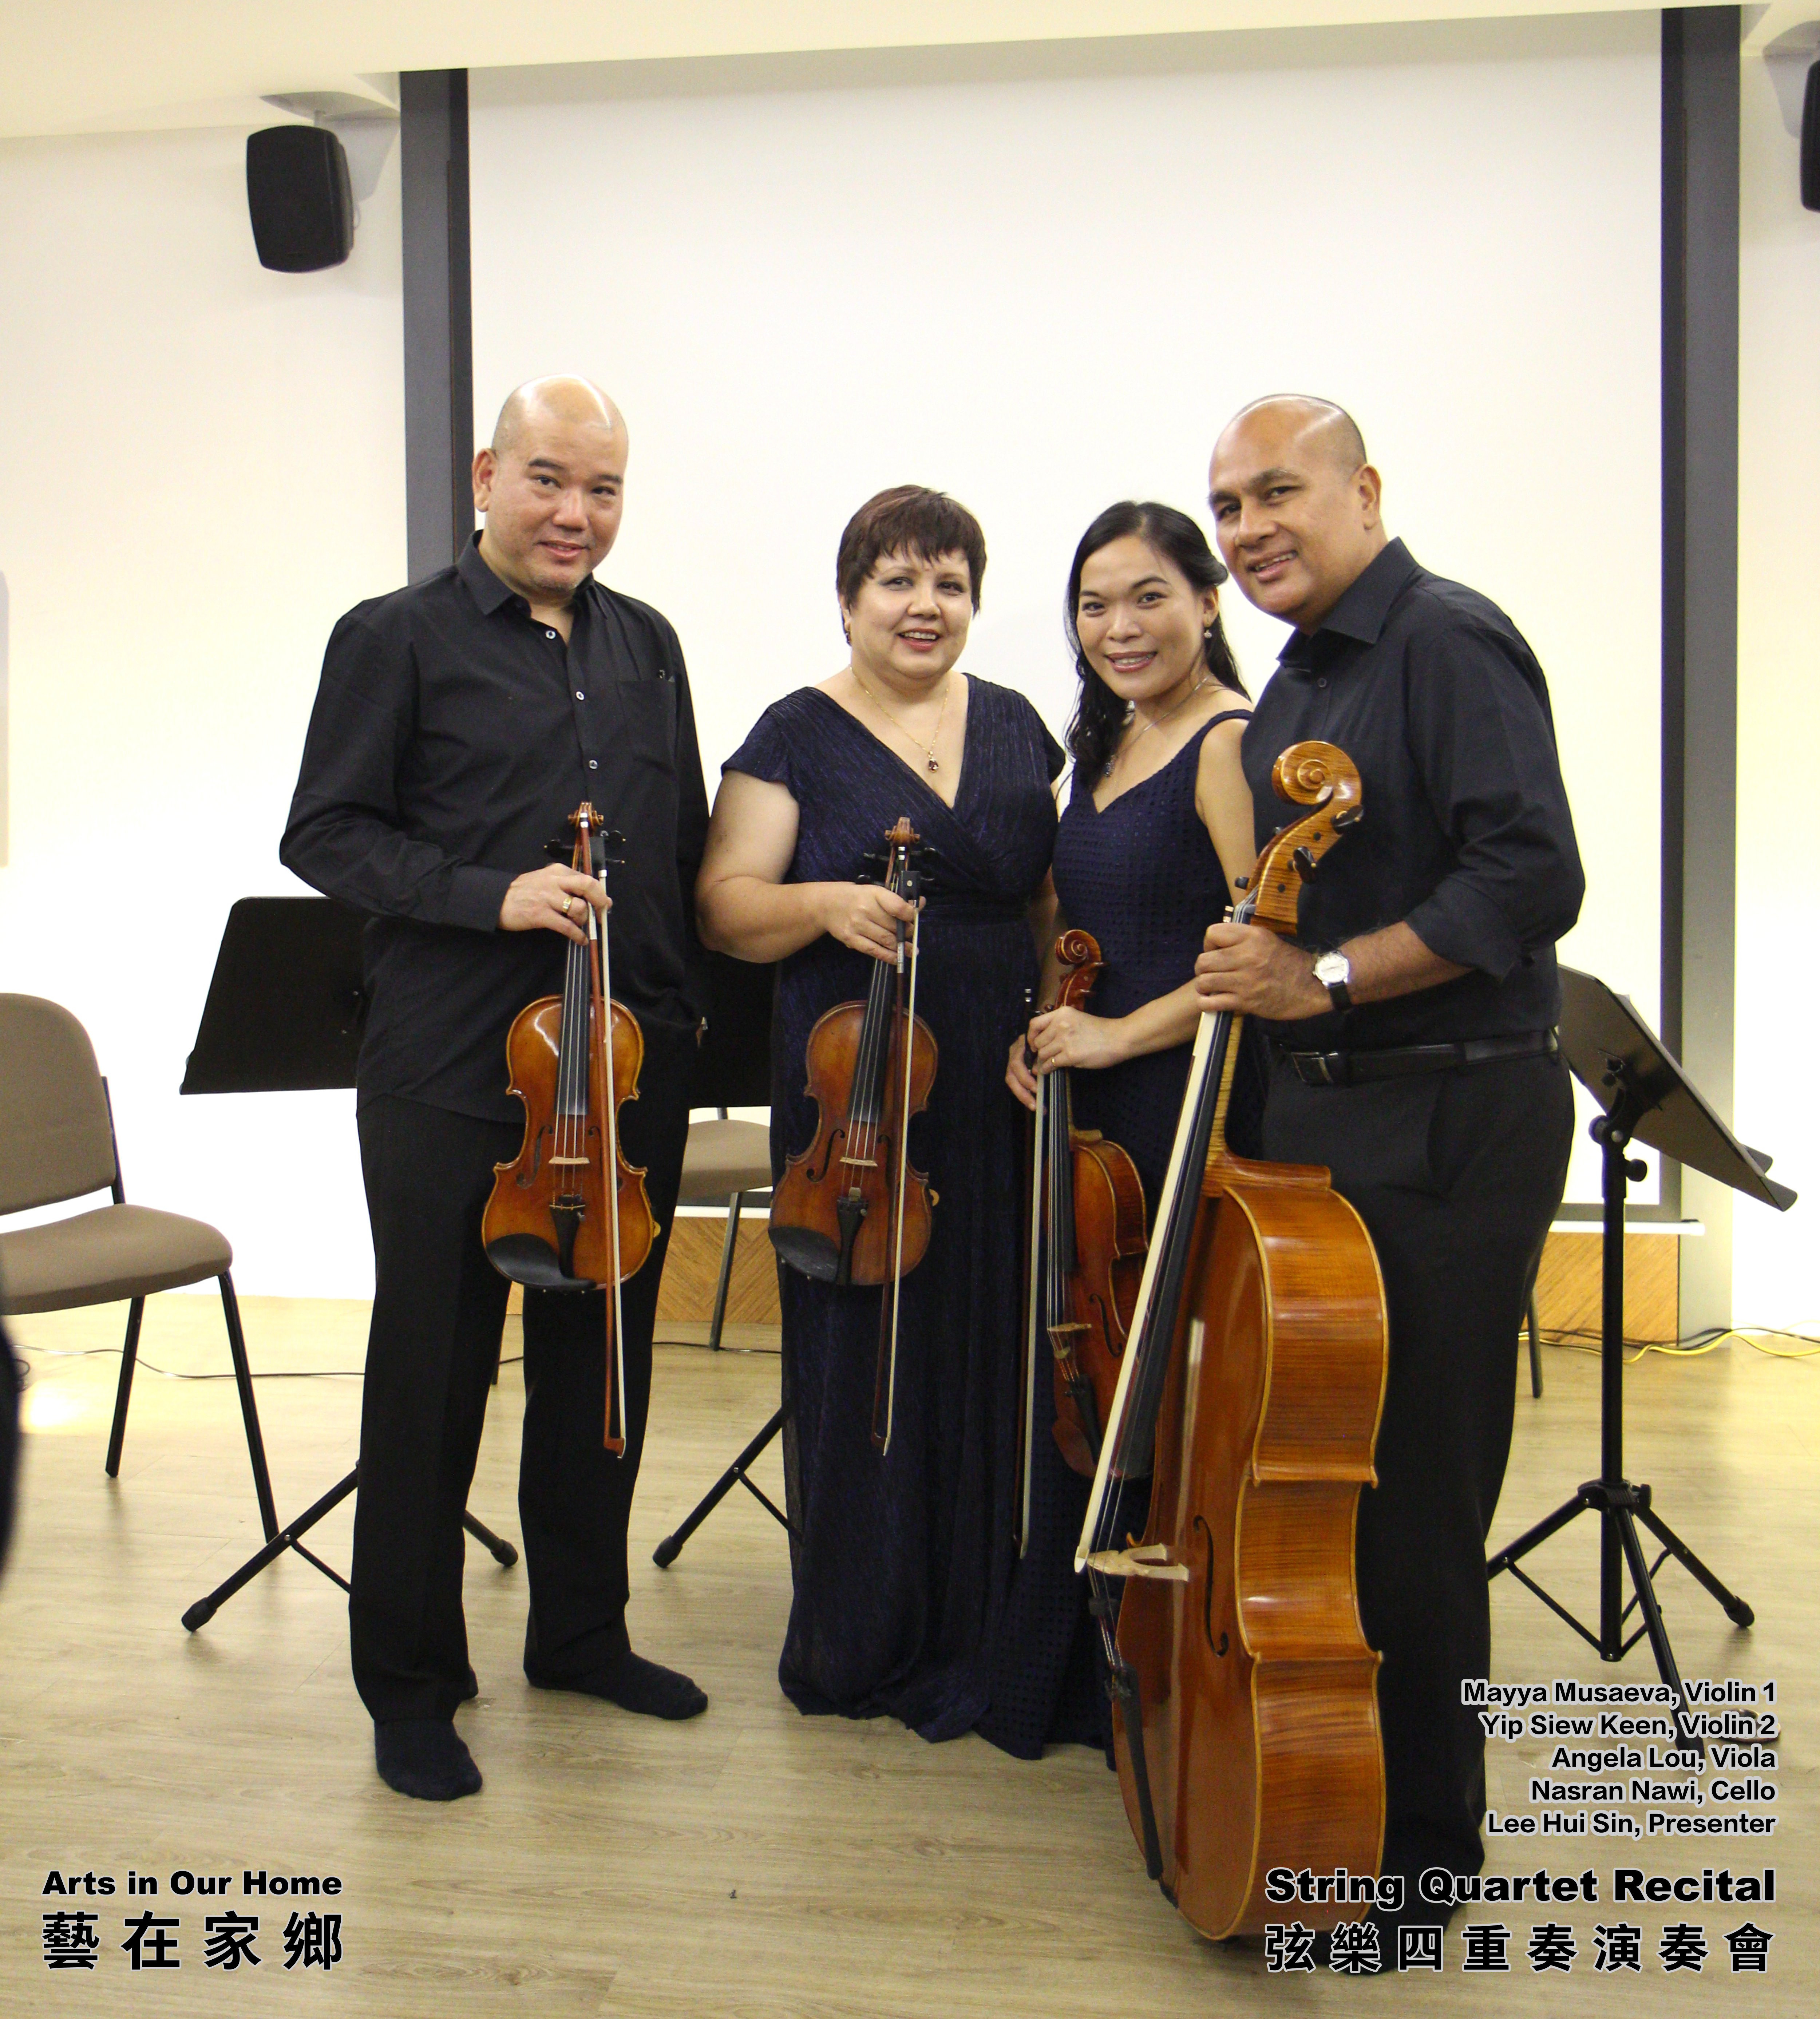 String Quartet Recital Arts in Our Home Batu Pahat Johor Malaysia 弦乐四重奏演奏会 艺在家乡 峇株巴辖 柔佛 马来西亚 A013